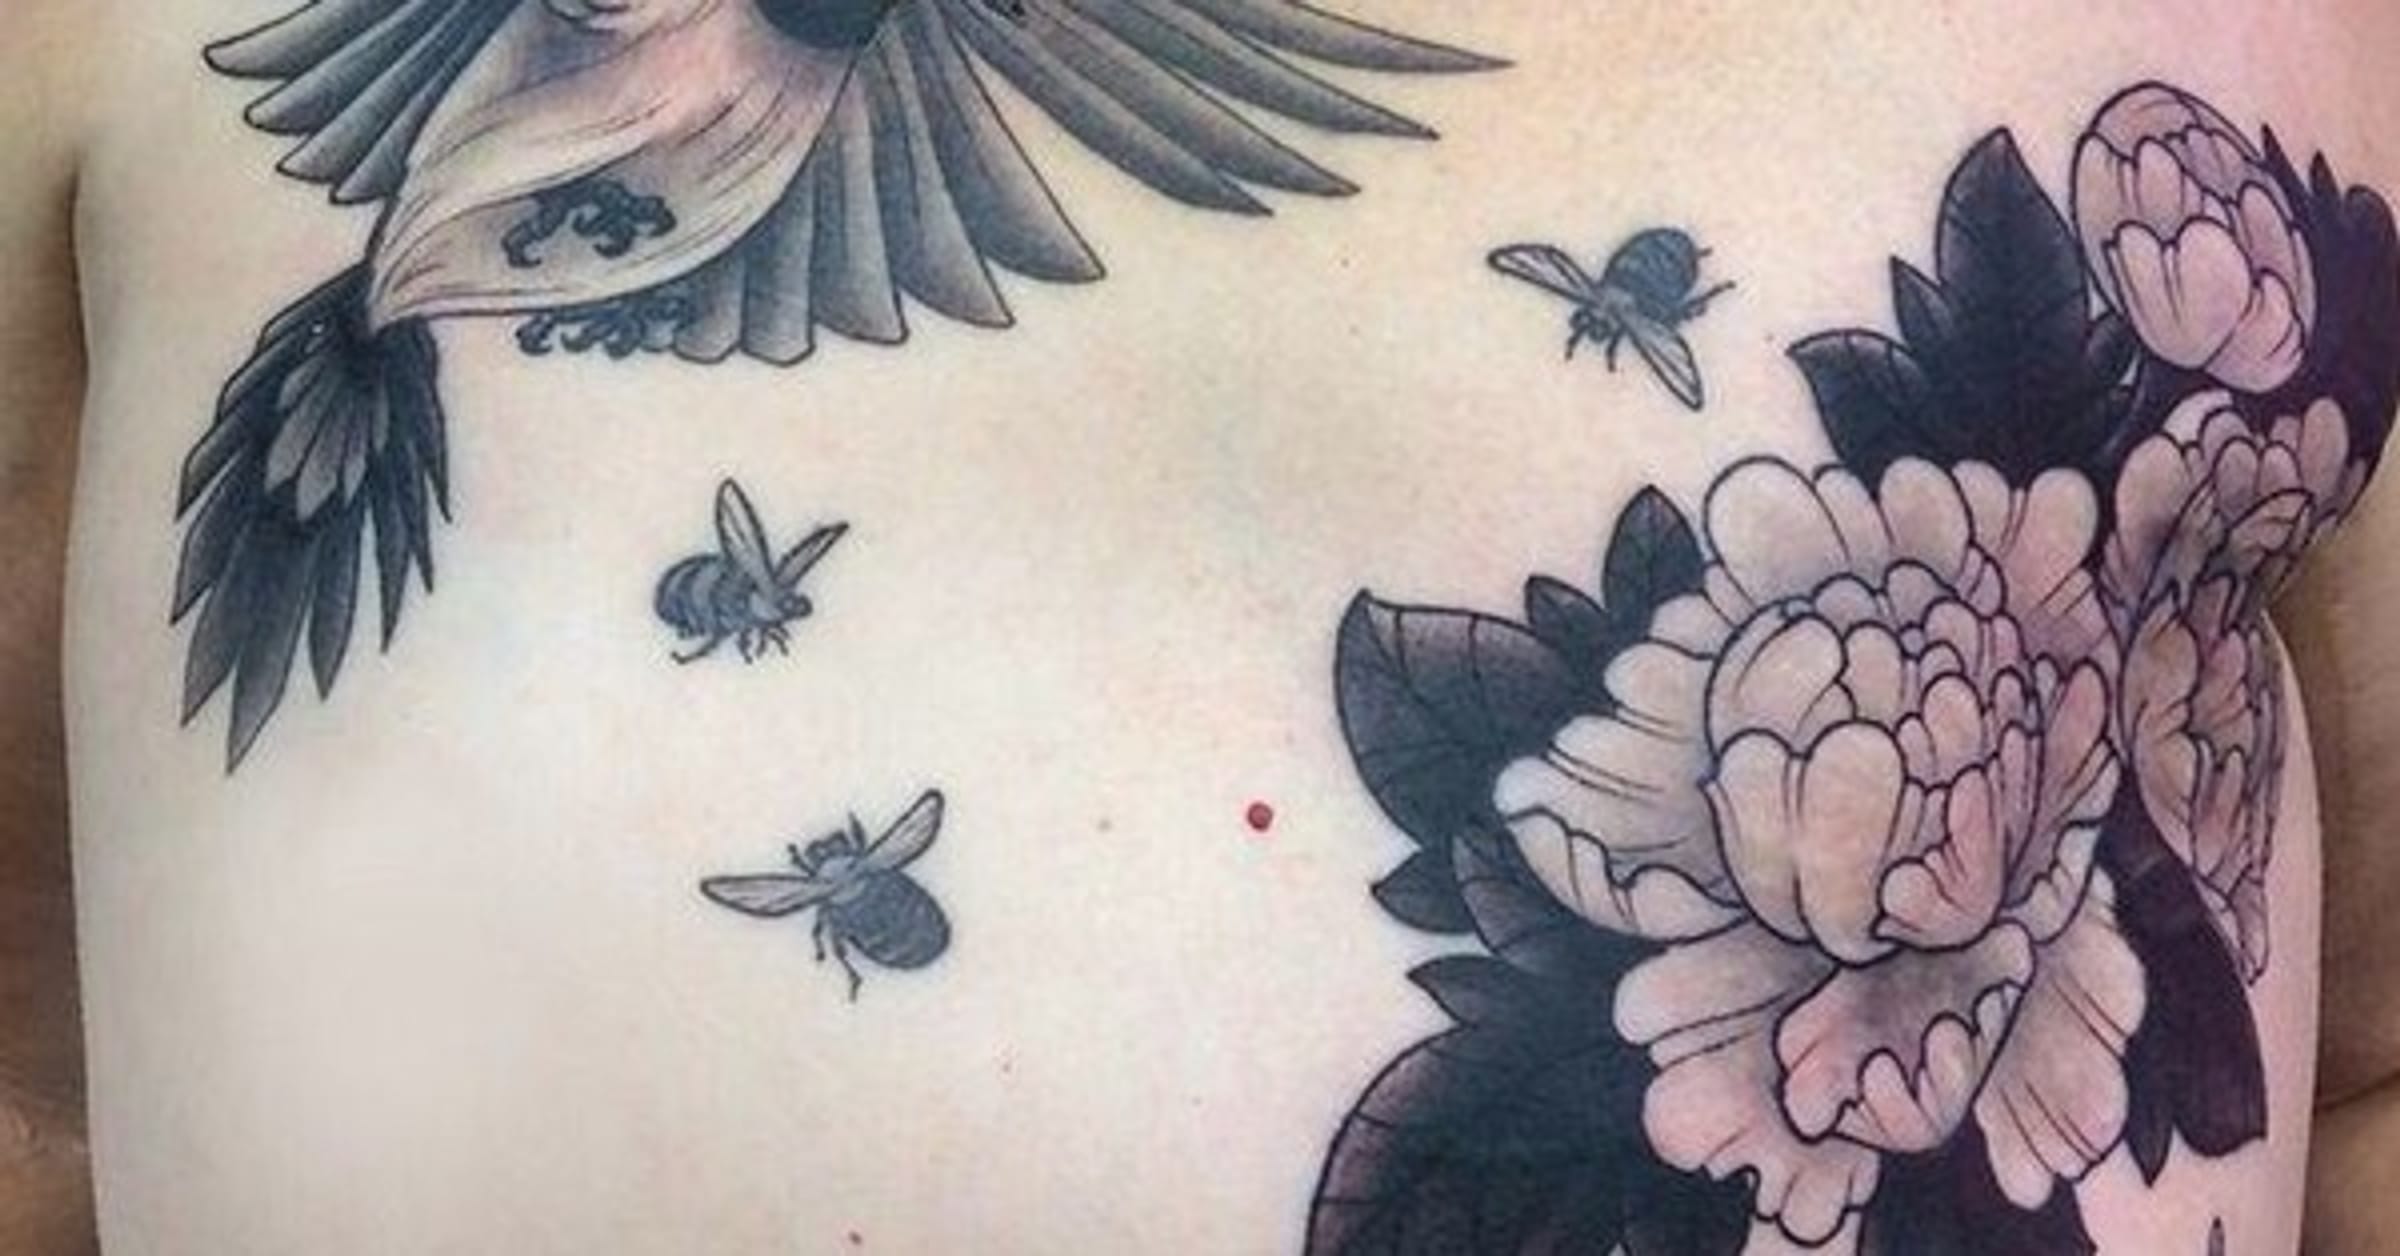 130 After mastectomy tattoo ideas